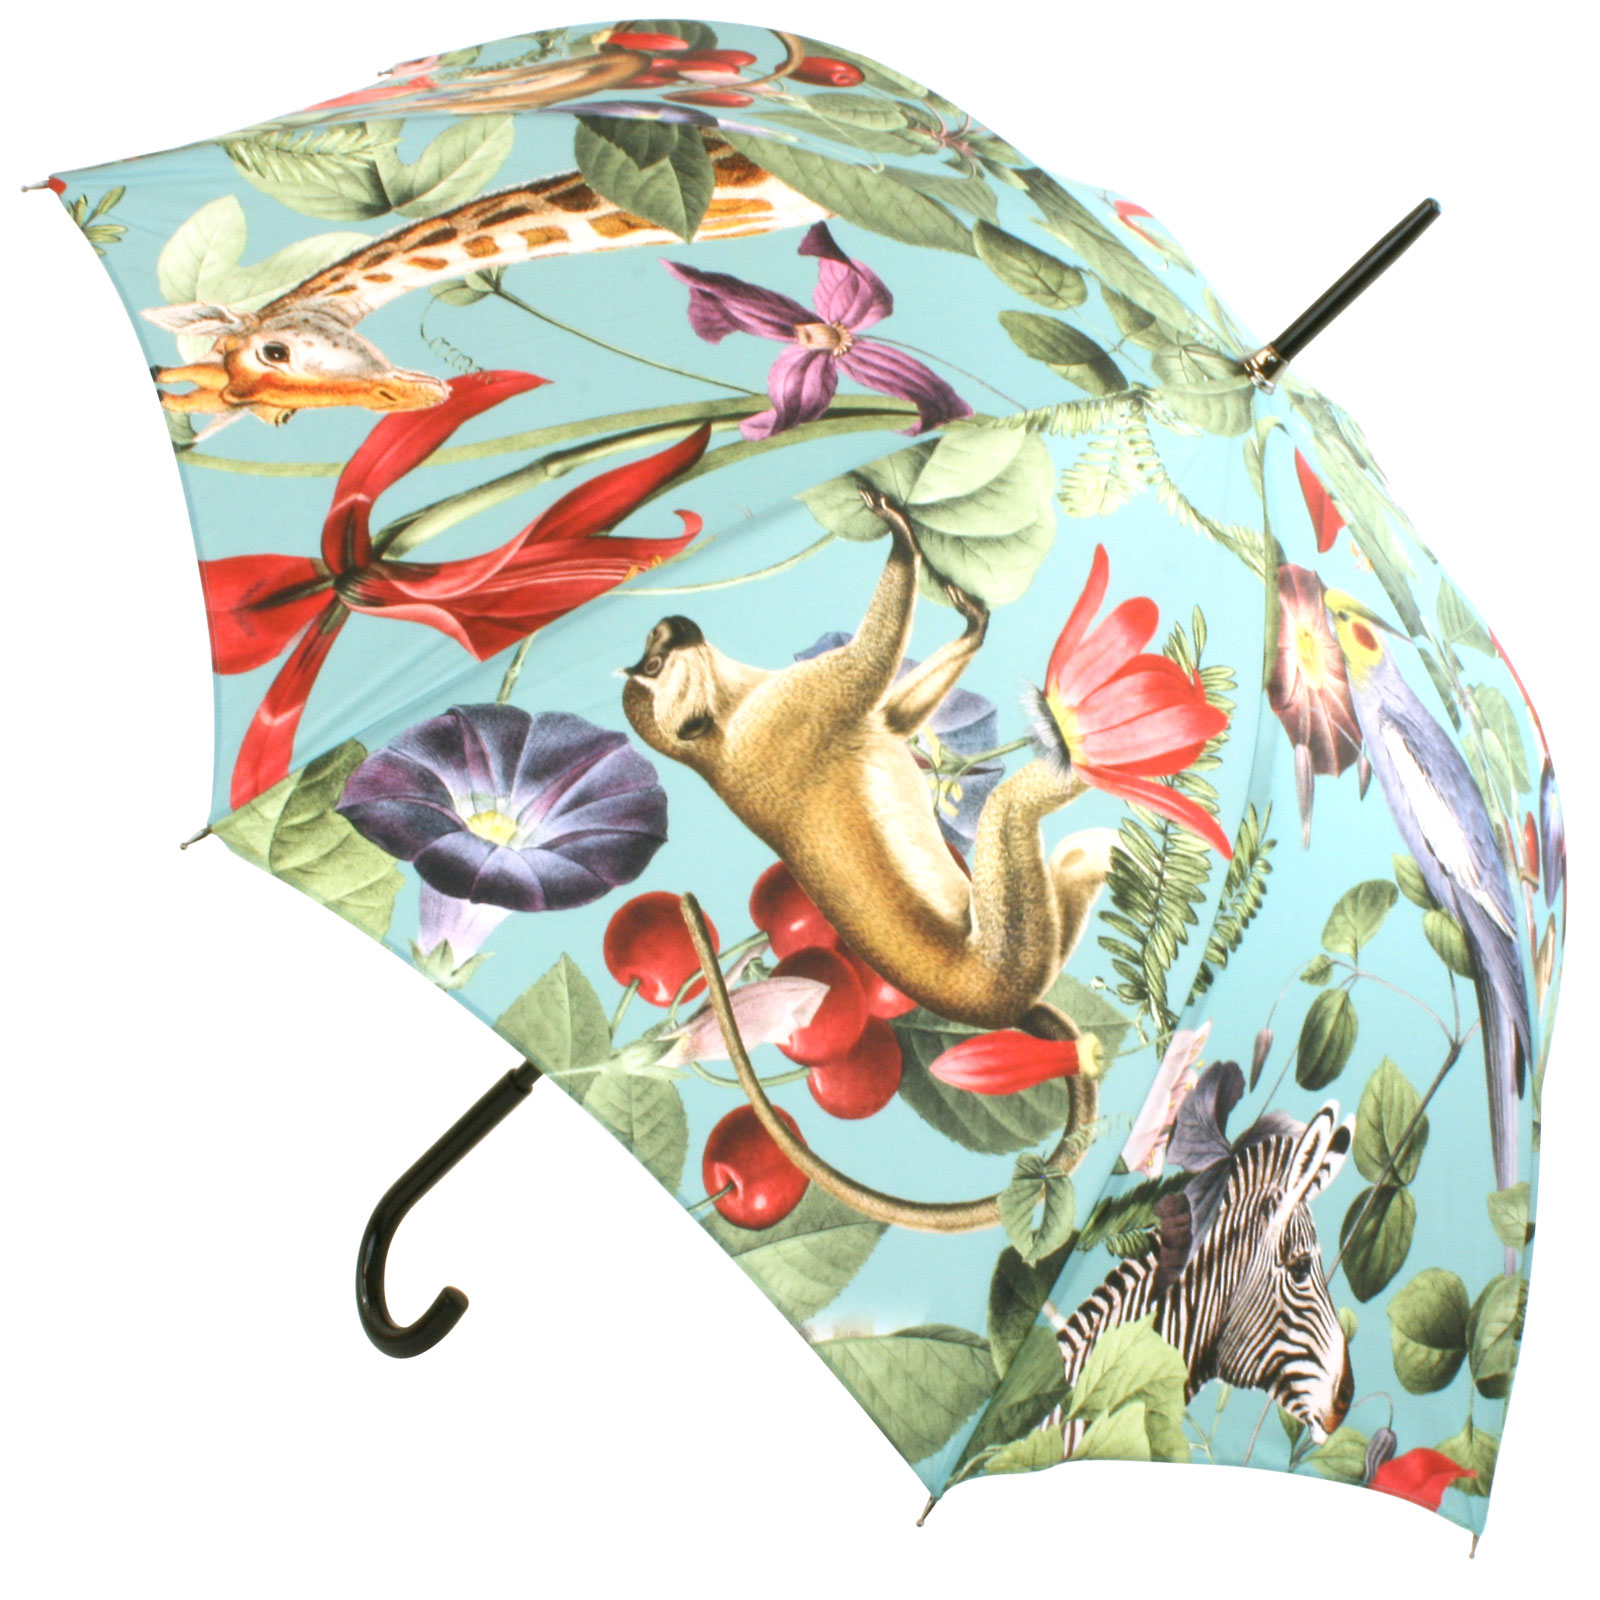 Jungle - Animaux de Safari - Mint Walking Length UVP Umbrella by Guy de Jean